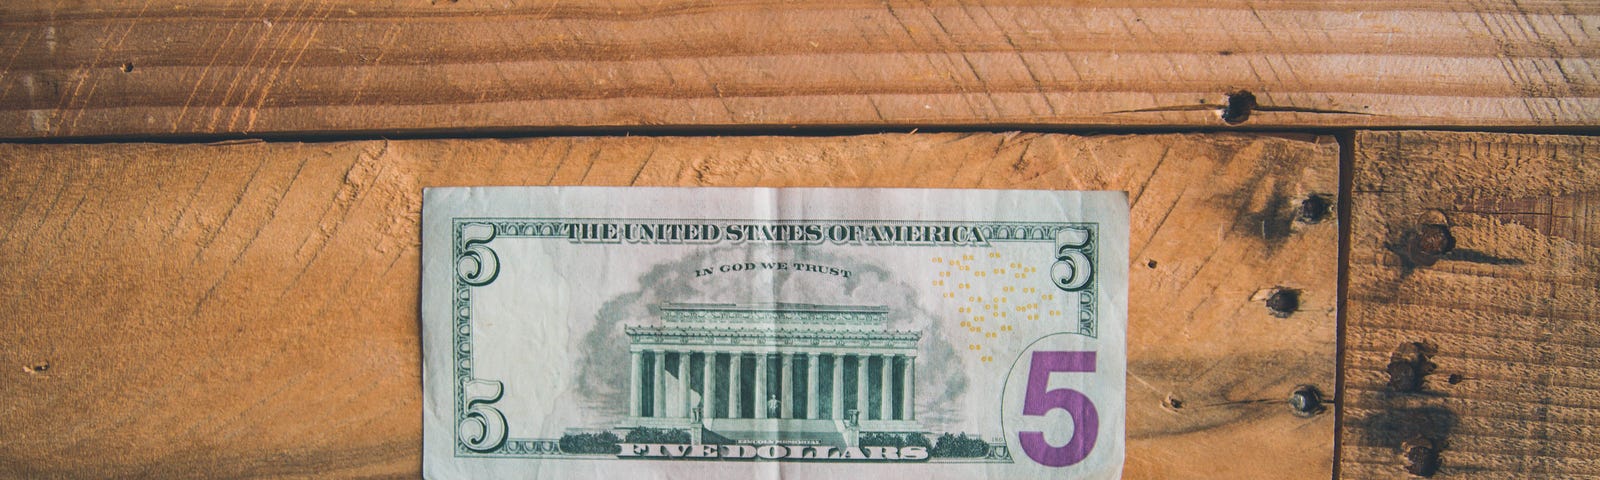 US 5 dollar bill lying on wooden floorboards.